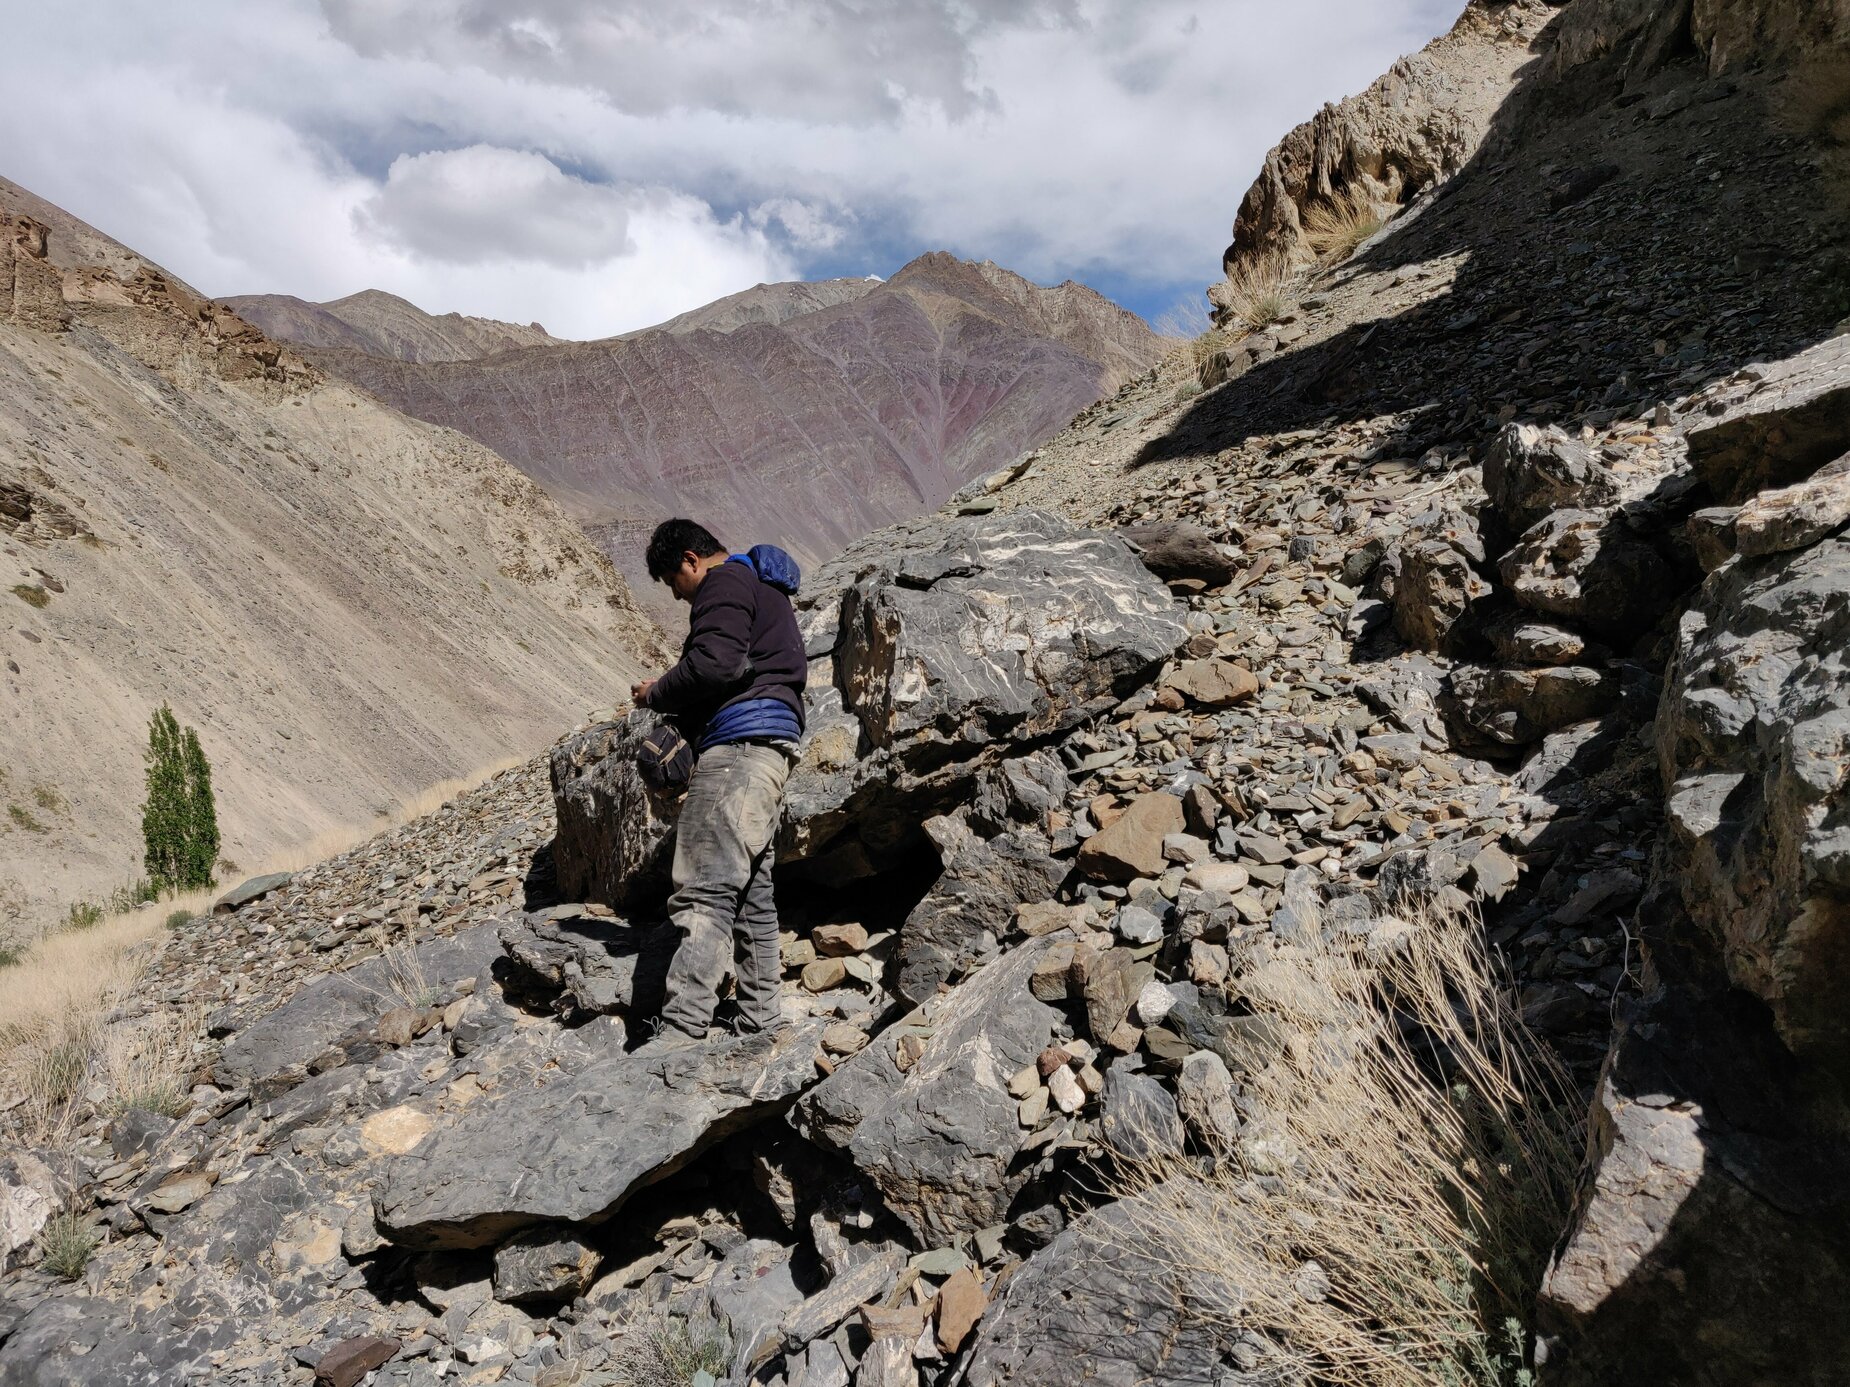 Sampling&#x20;rock-dwelling&#x20;pika&#x20;habitat&#x20;in&#x20;Ladakh.